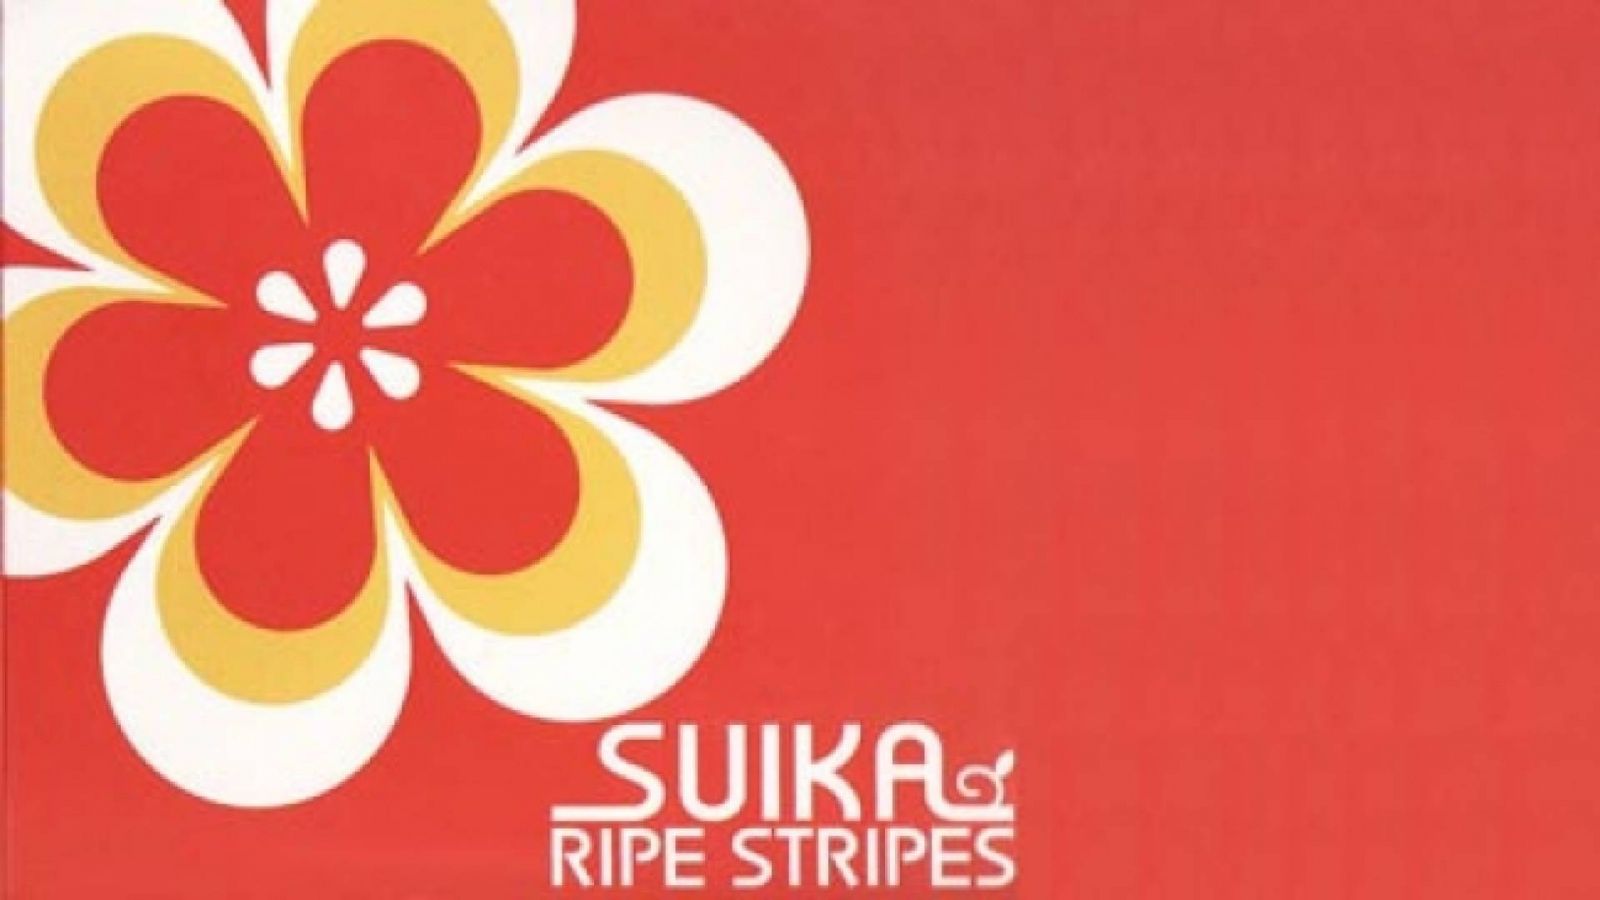 Suika - RIPE STRIPES © Soundlicious